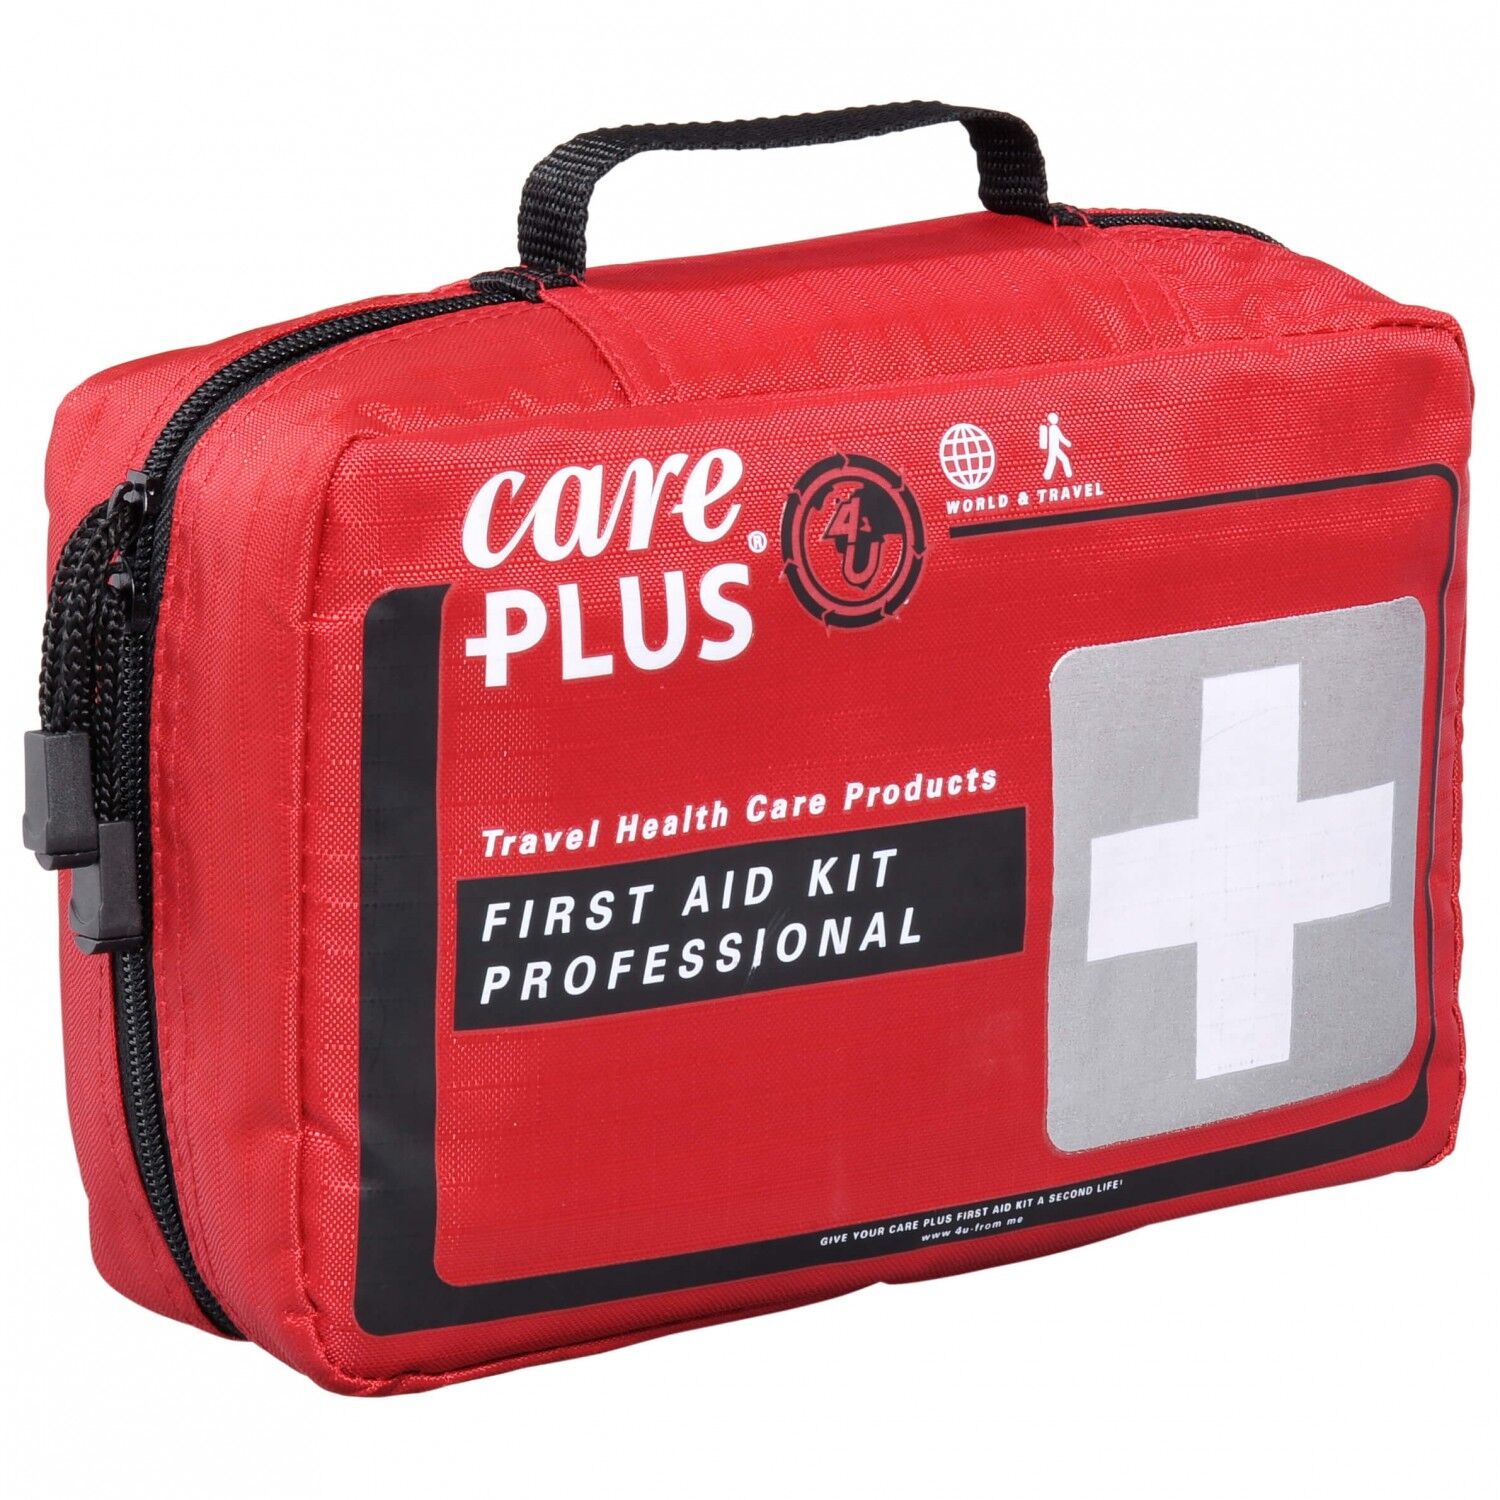 https://images.hardloop.fr/176030/care-plus-first-aid-kit-professional-erste-hilfe-set.jpg?w=auto&h=auto&q=80